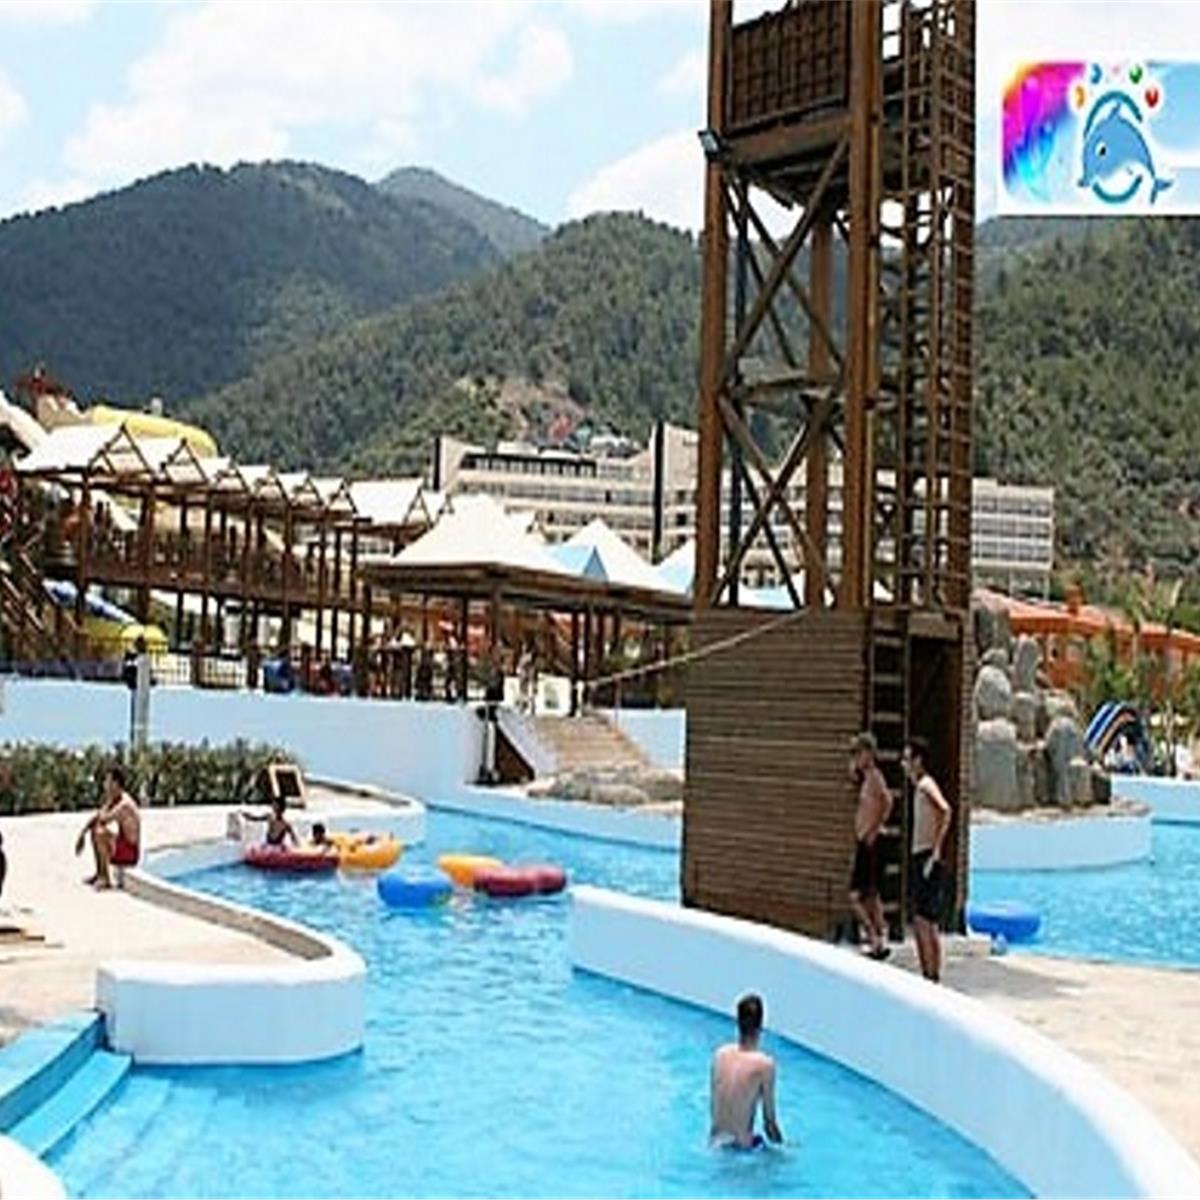 İzmir’in İlk ve Tek Aquaparkı Aquacity Balçova Termal’de Aquapark, Yüzme Havuzla